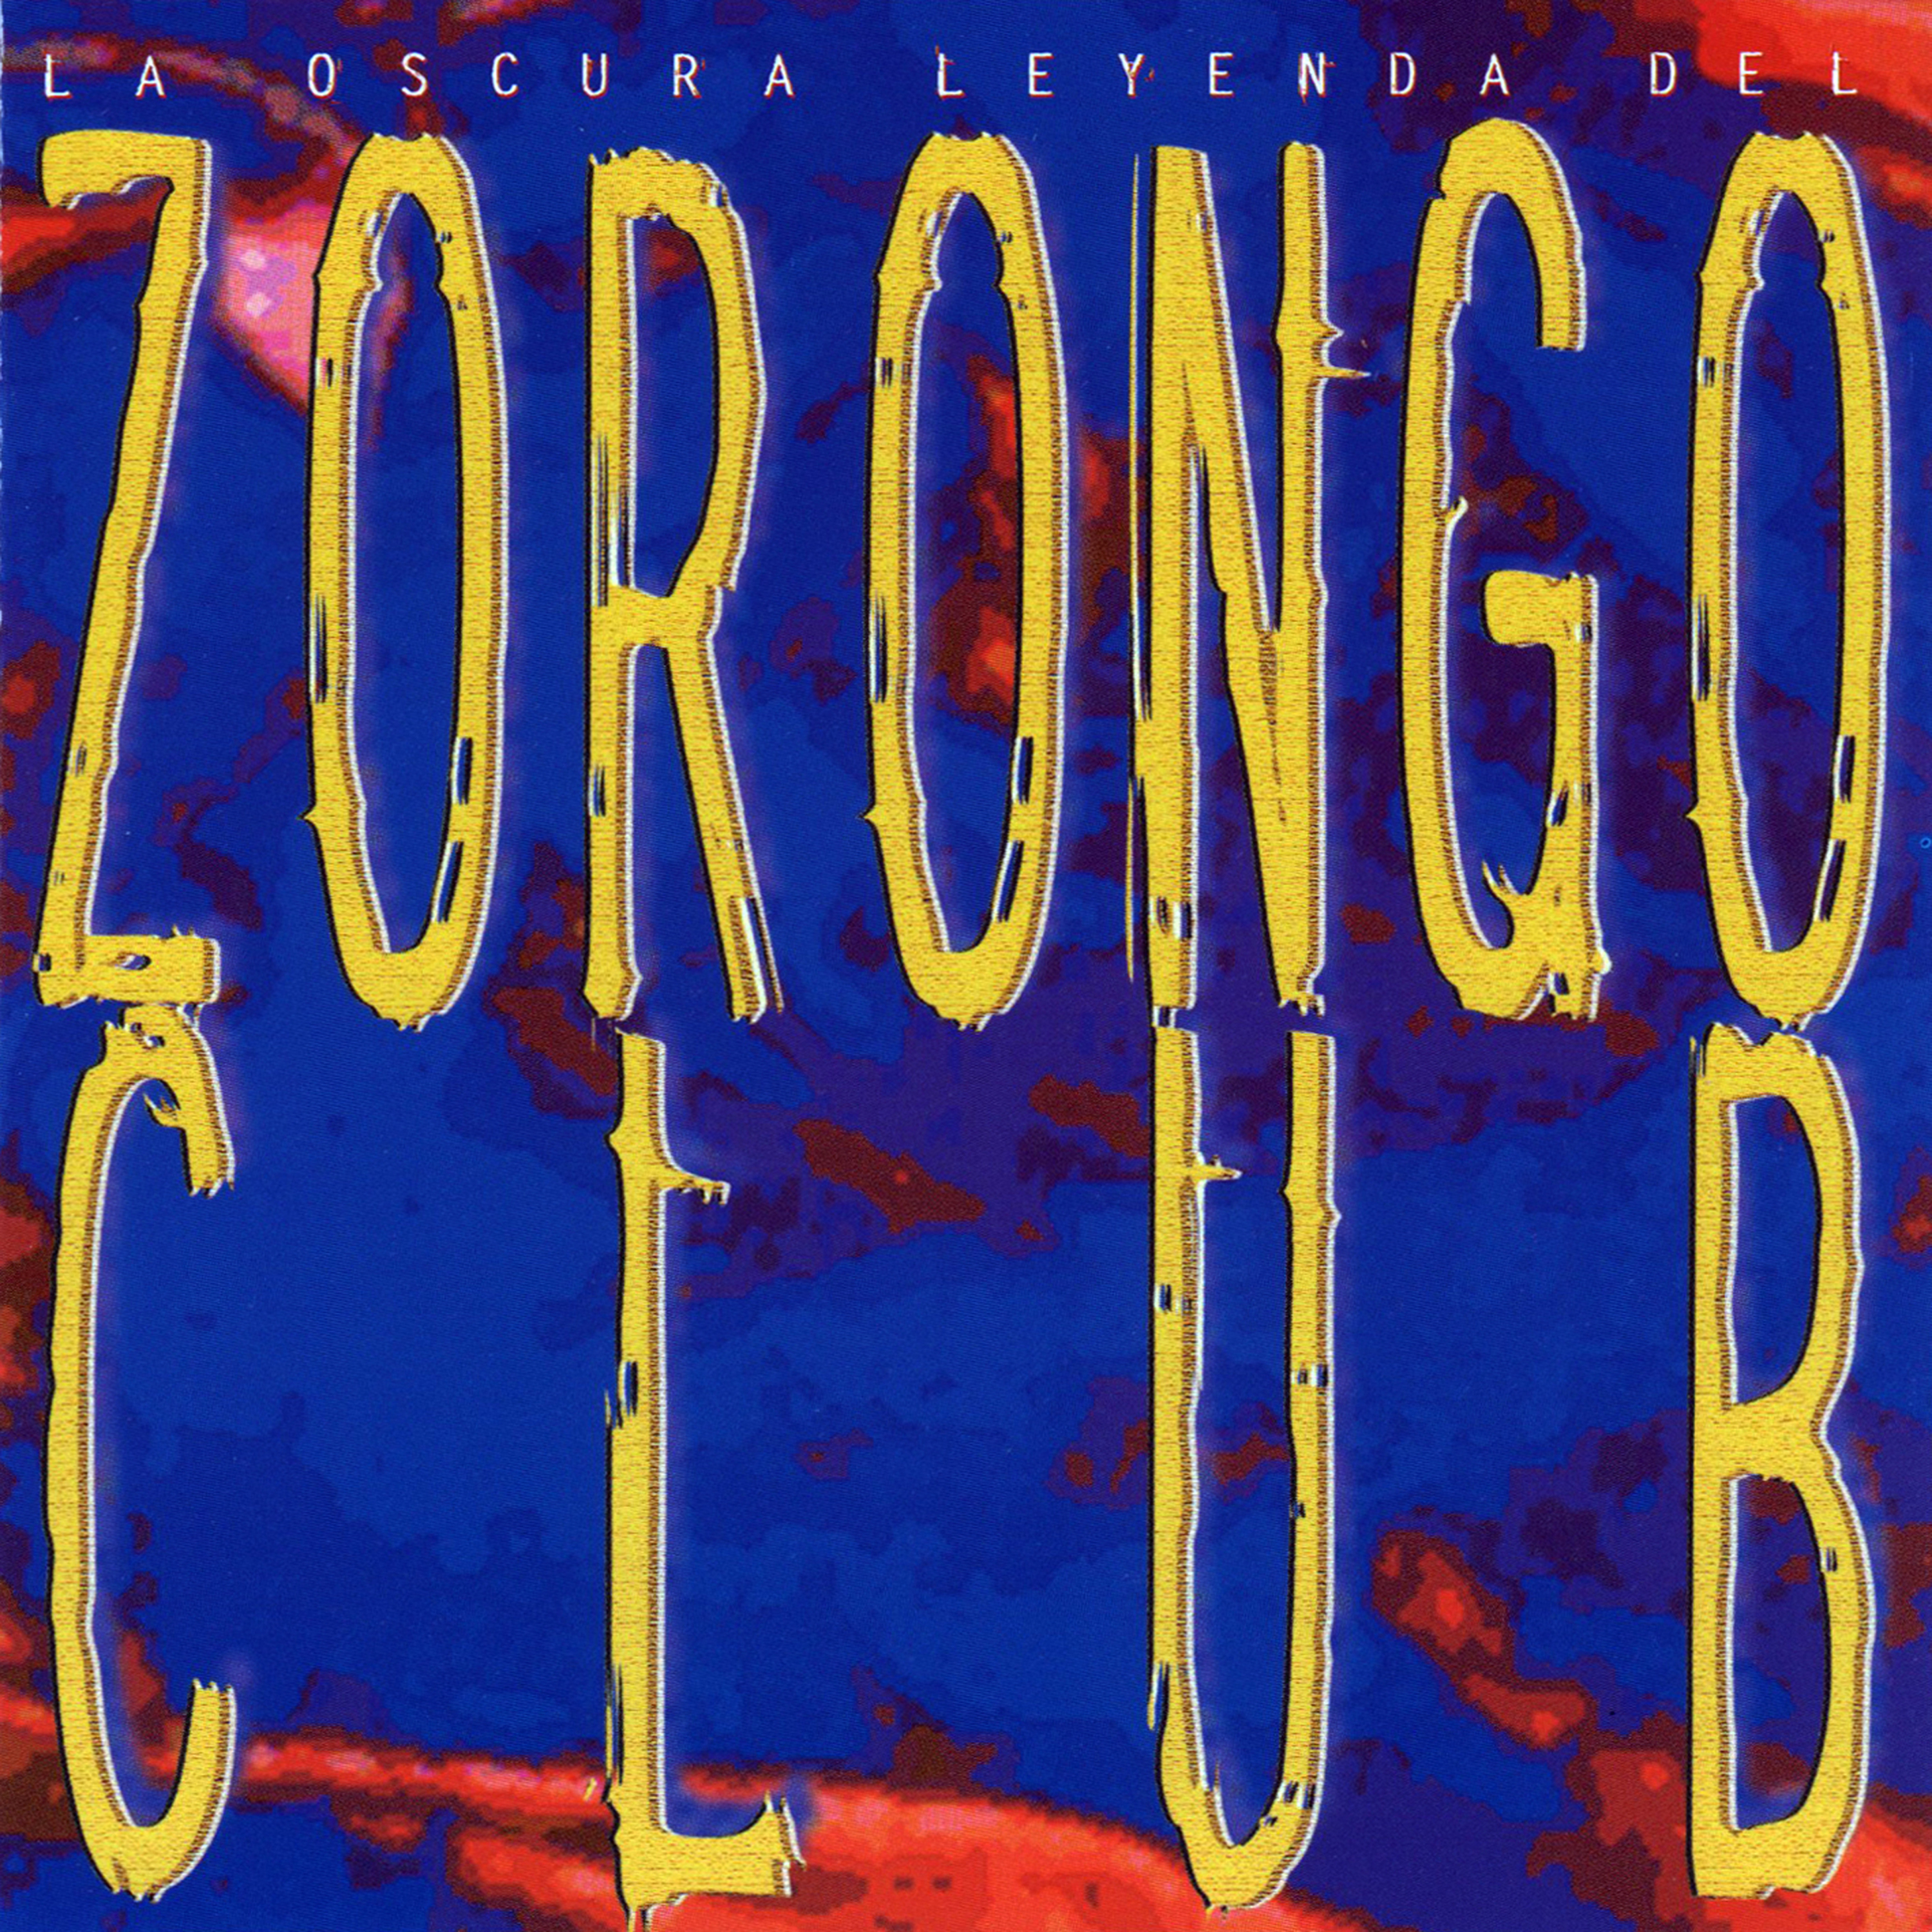 La Oscura Leyenda del Zorongo Club